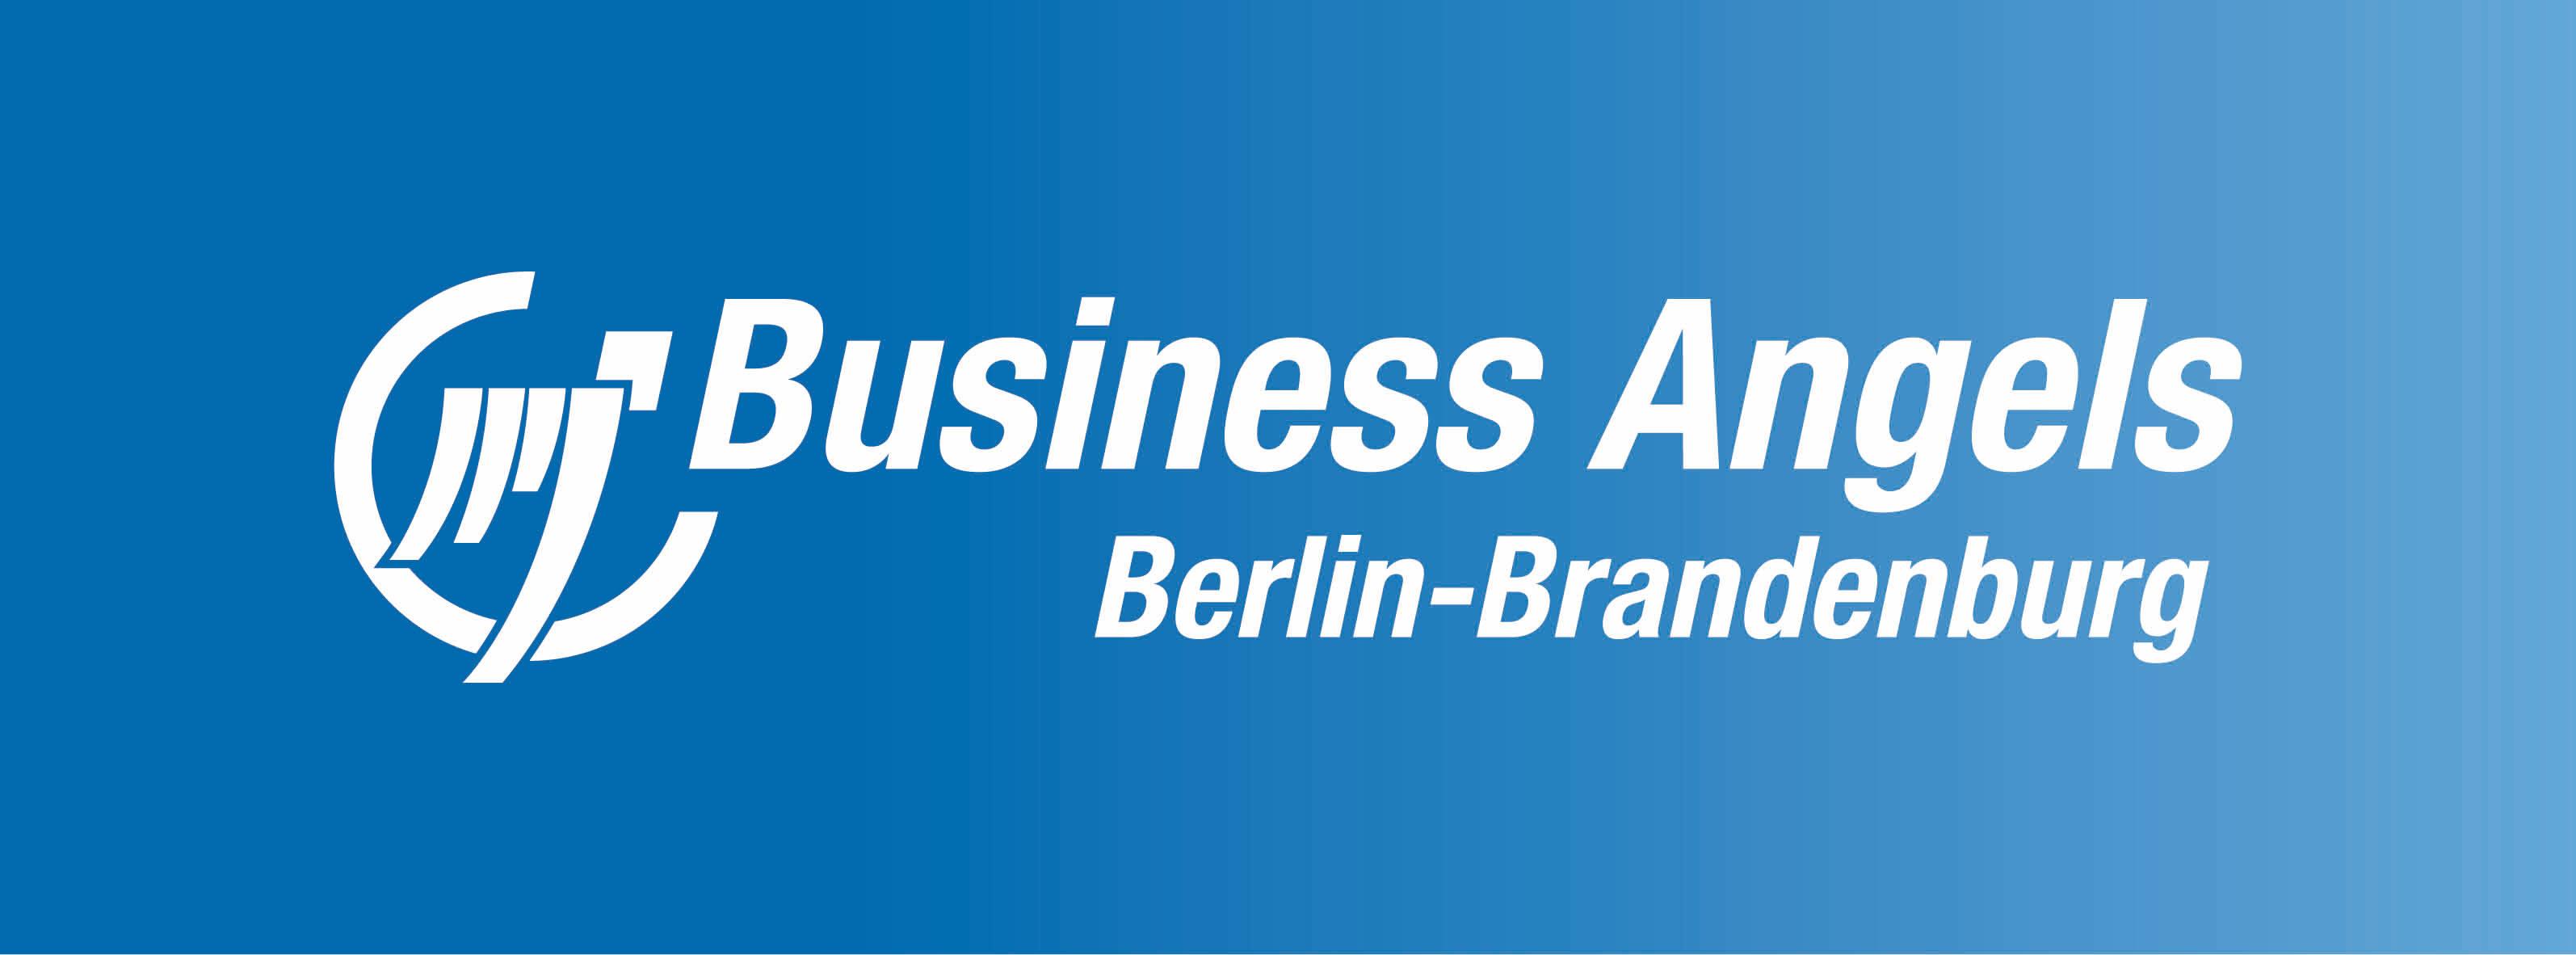 Business Angels Club Berlin-Brandenburg